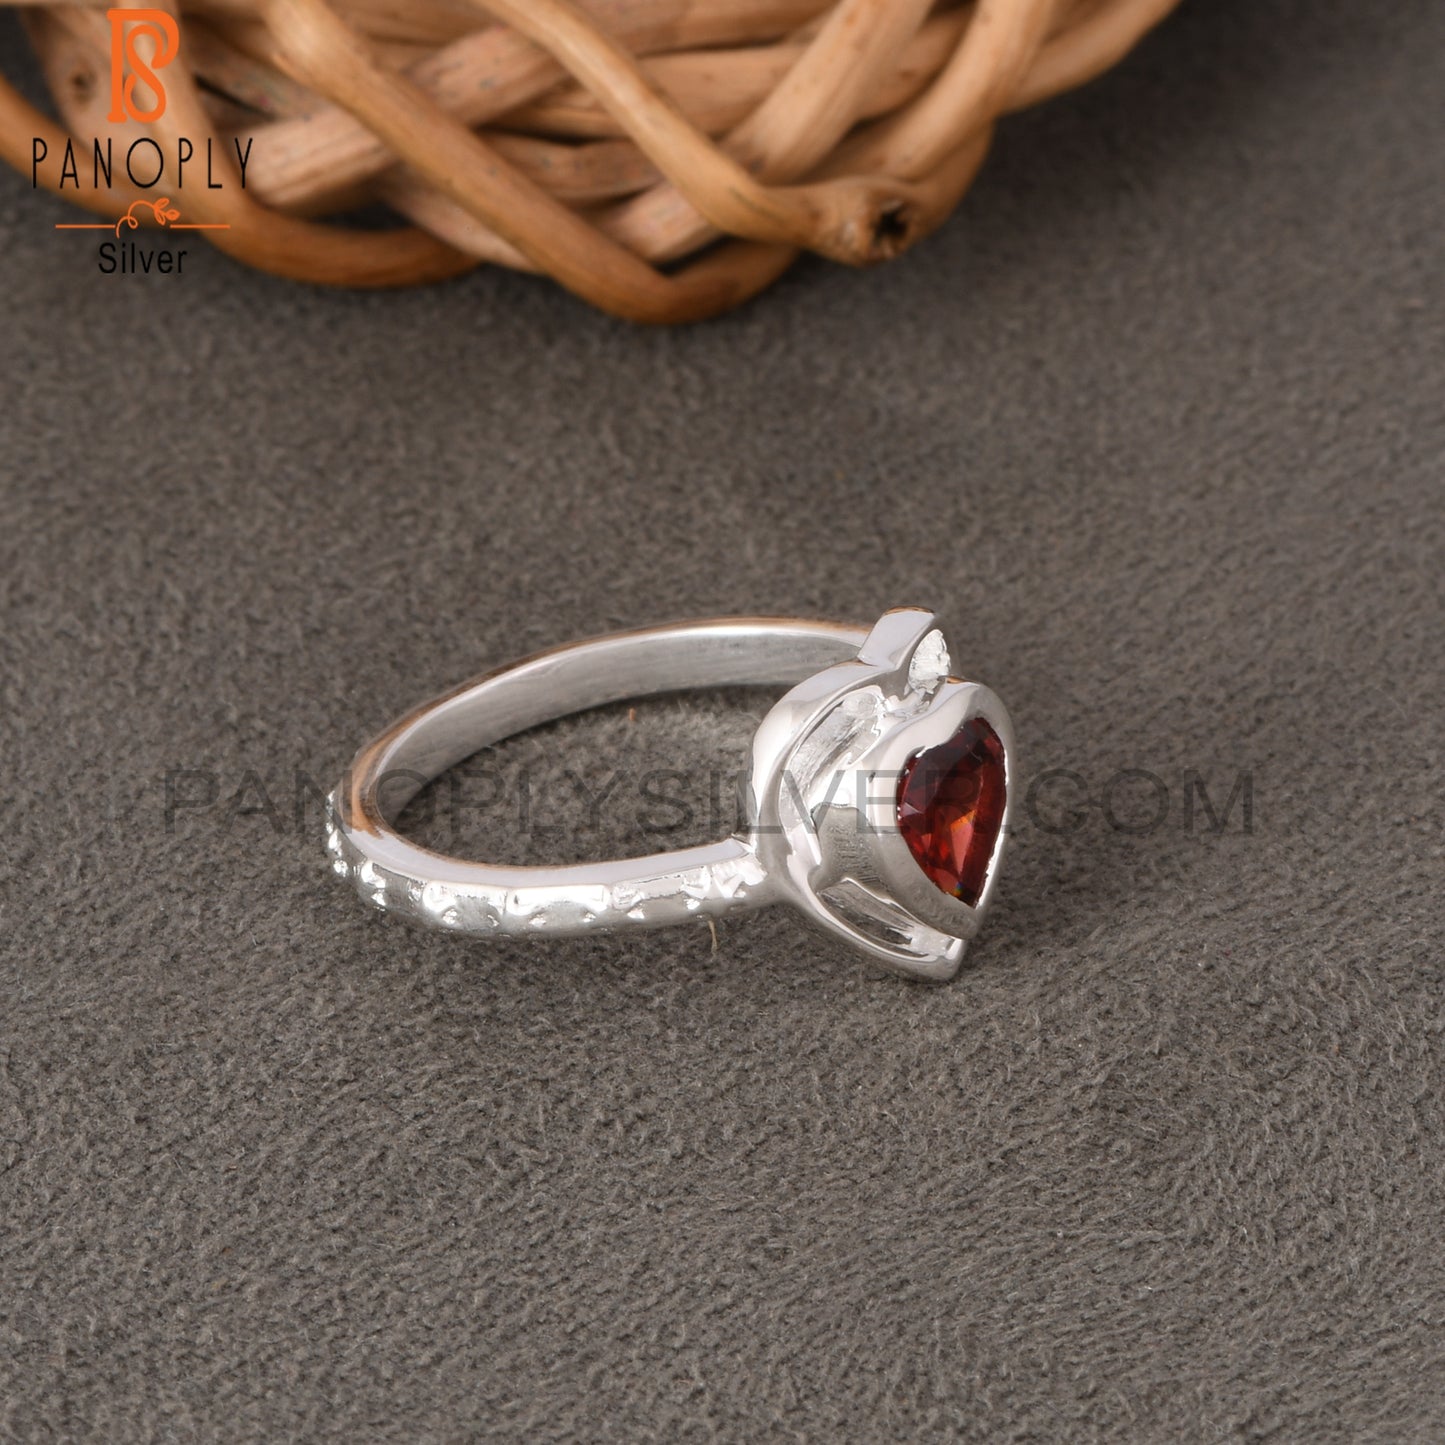 Garnet Heart 925 Sterling Silver Ring